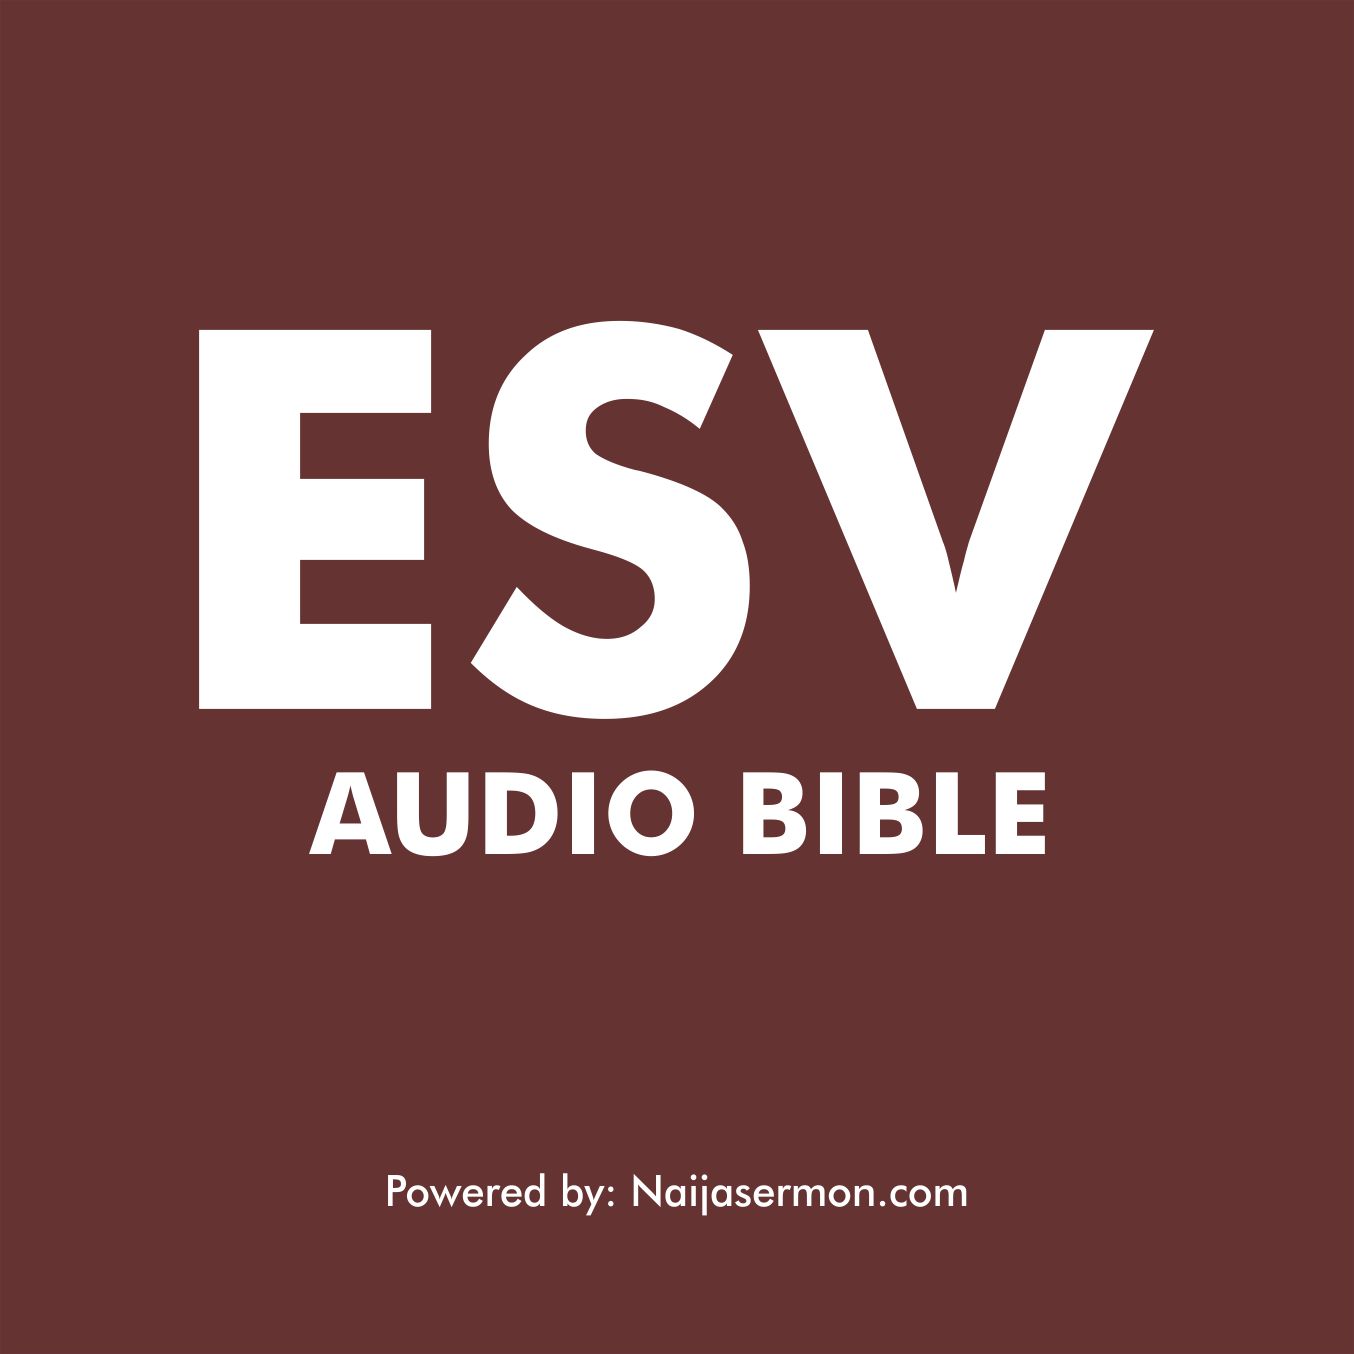 [Free] Download English Standard Version (ESV) Audio Bible MP3 - Dramatized 21